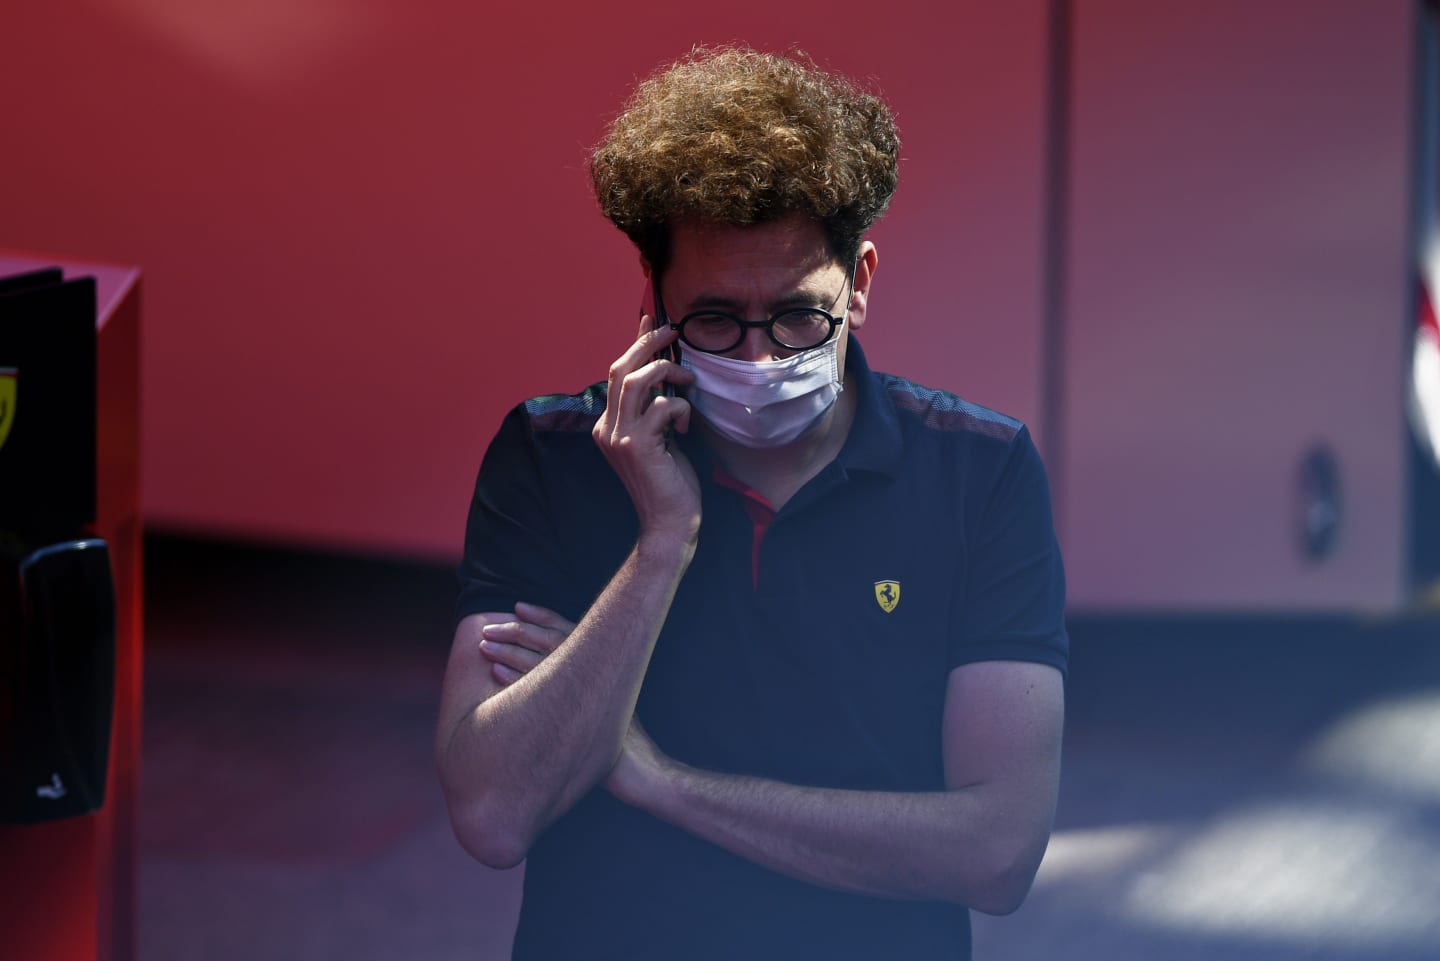 MONZA, ITALY - SEPTEMBER 03: Scuderia Ferrari Team Principal Mattia Binotto talks on the phone in